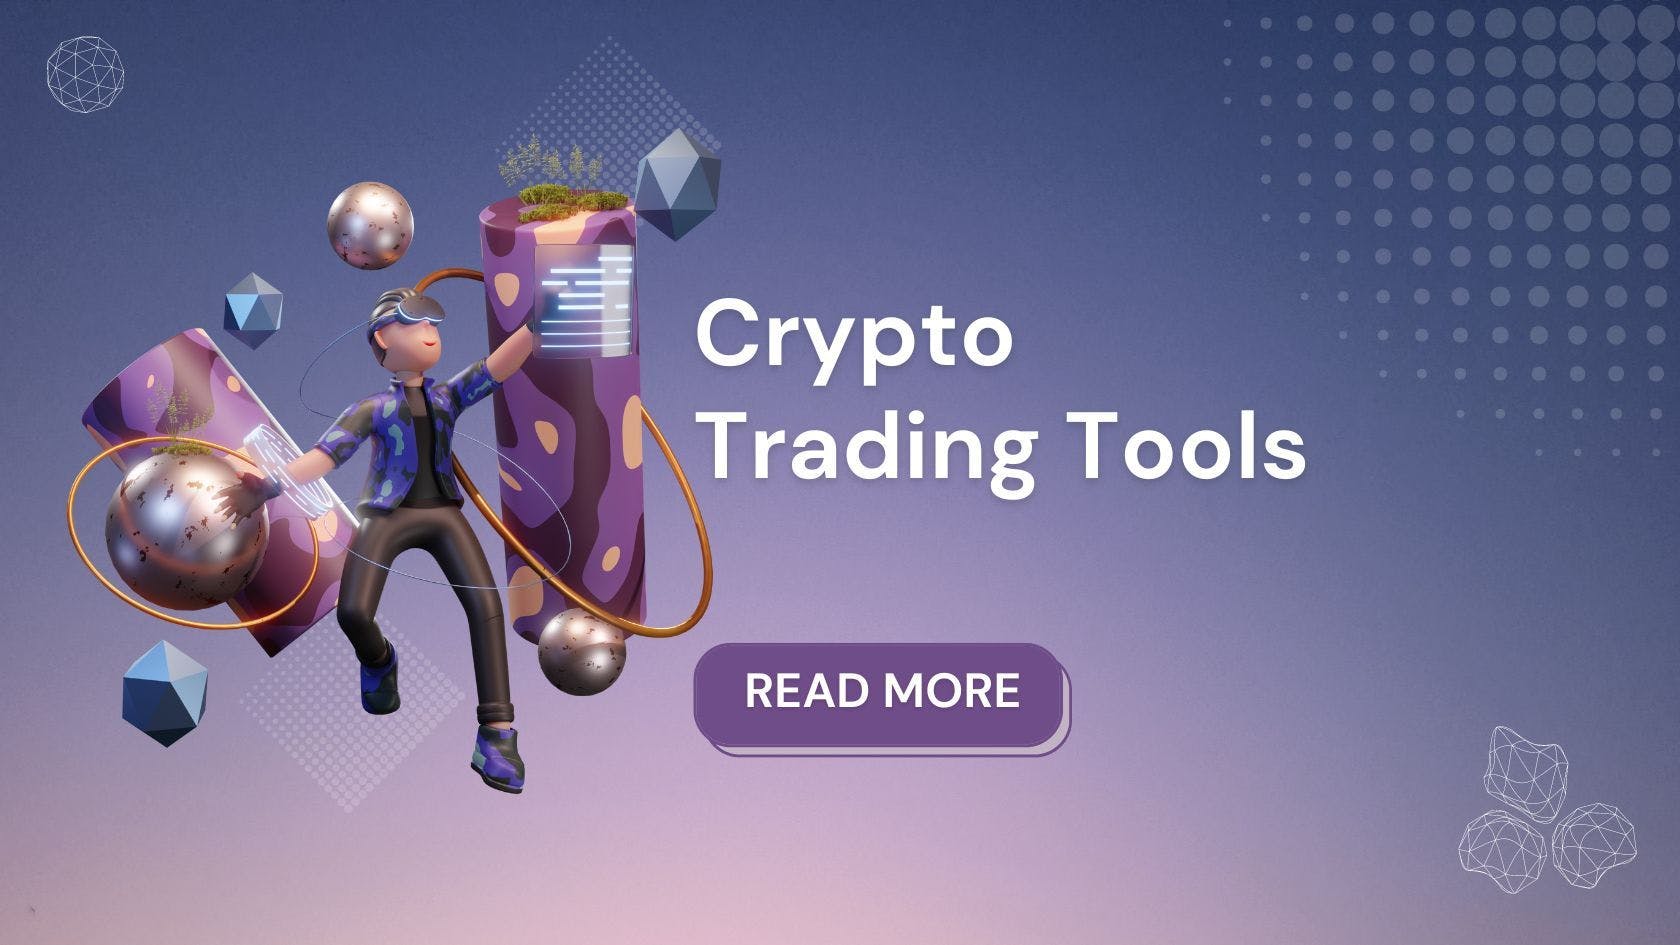 https://altrady-strapi.s3.eu-west-1.amazonaws.com/How_to_use_crypto_trading_tools_1b9958c585.jpg